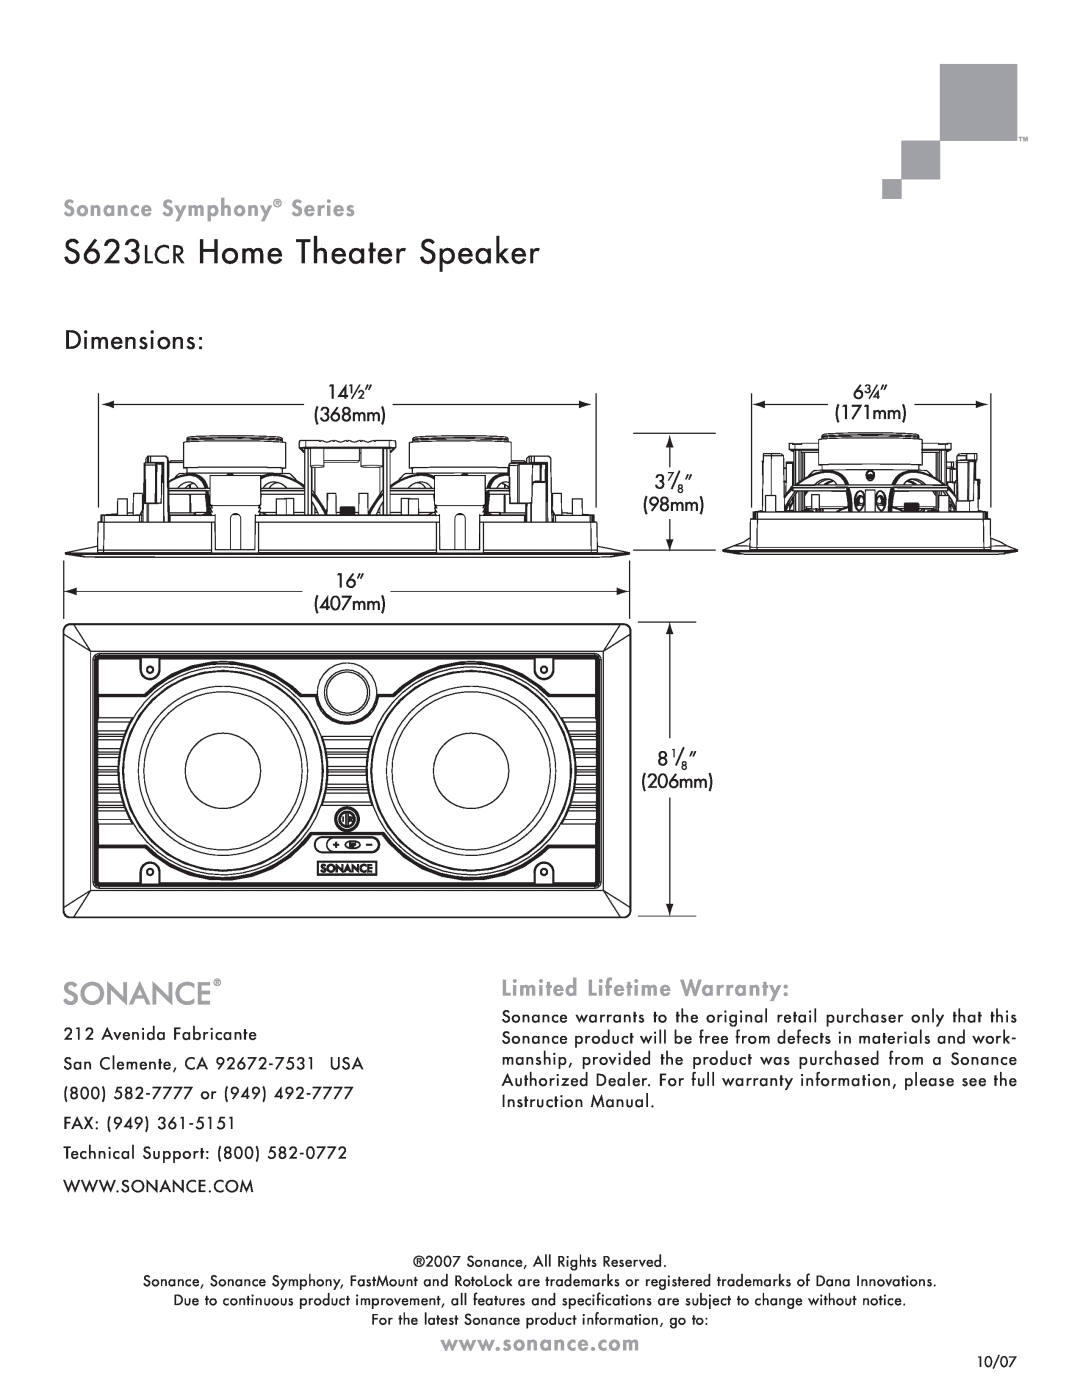 Sonance S623LCR Home Theater Speaker, Dimensions, Limited Lifetime Warranty, Sonance Symphony Series, 14½”, 368mm, 98mm 